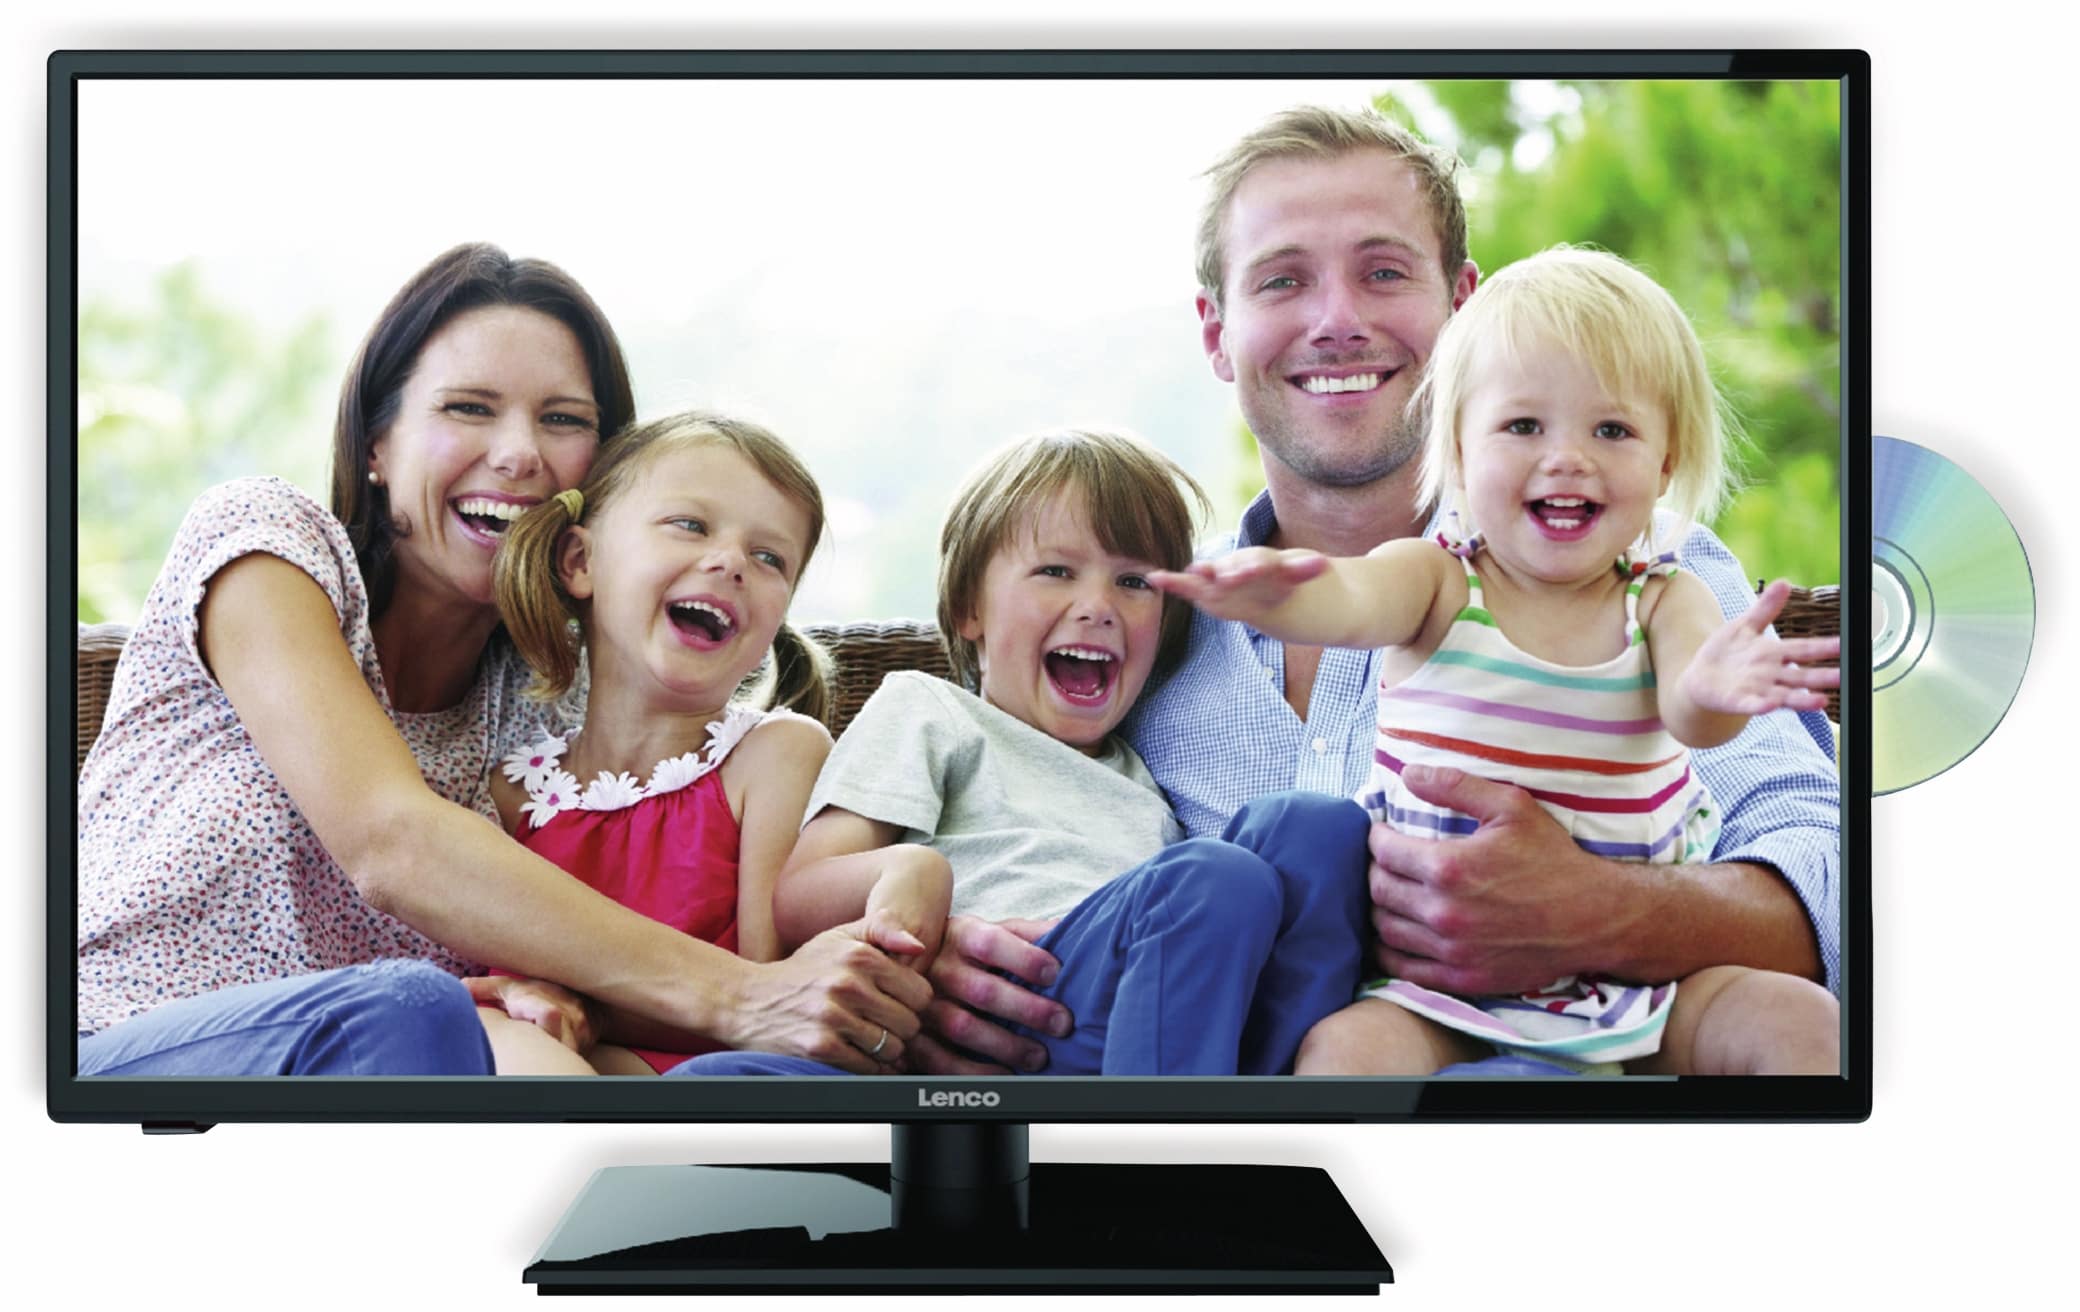 Lenco LED-TV DVL-3242 HD, 81 cm (32"), 16:9 Bildschirm, mit DVD-Player, schwarz, EEK: E